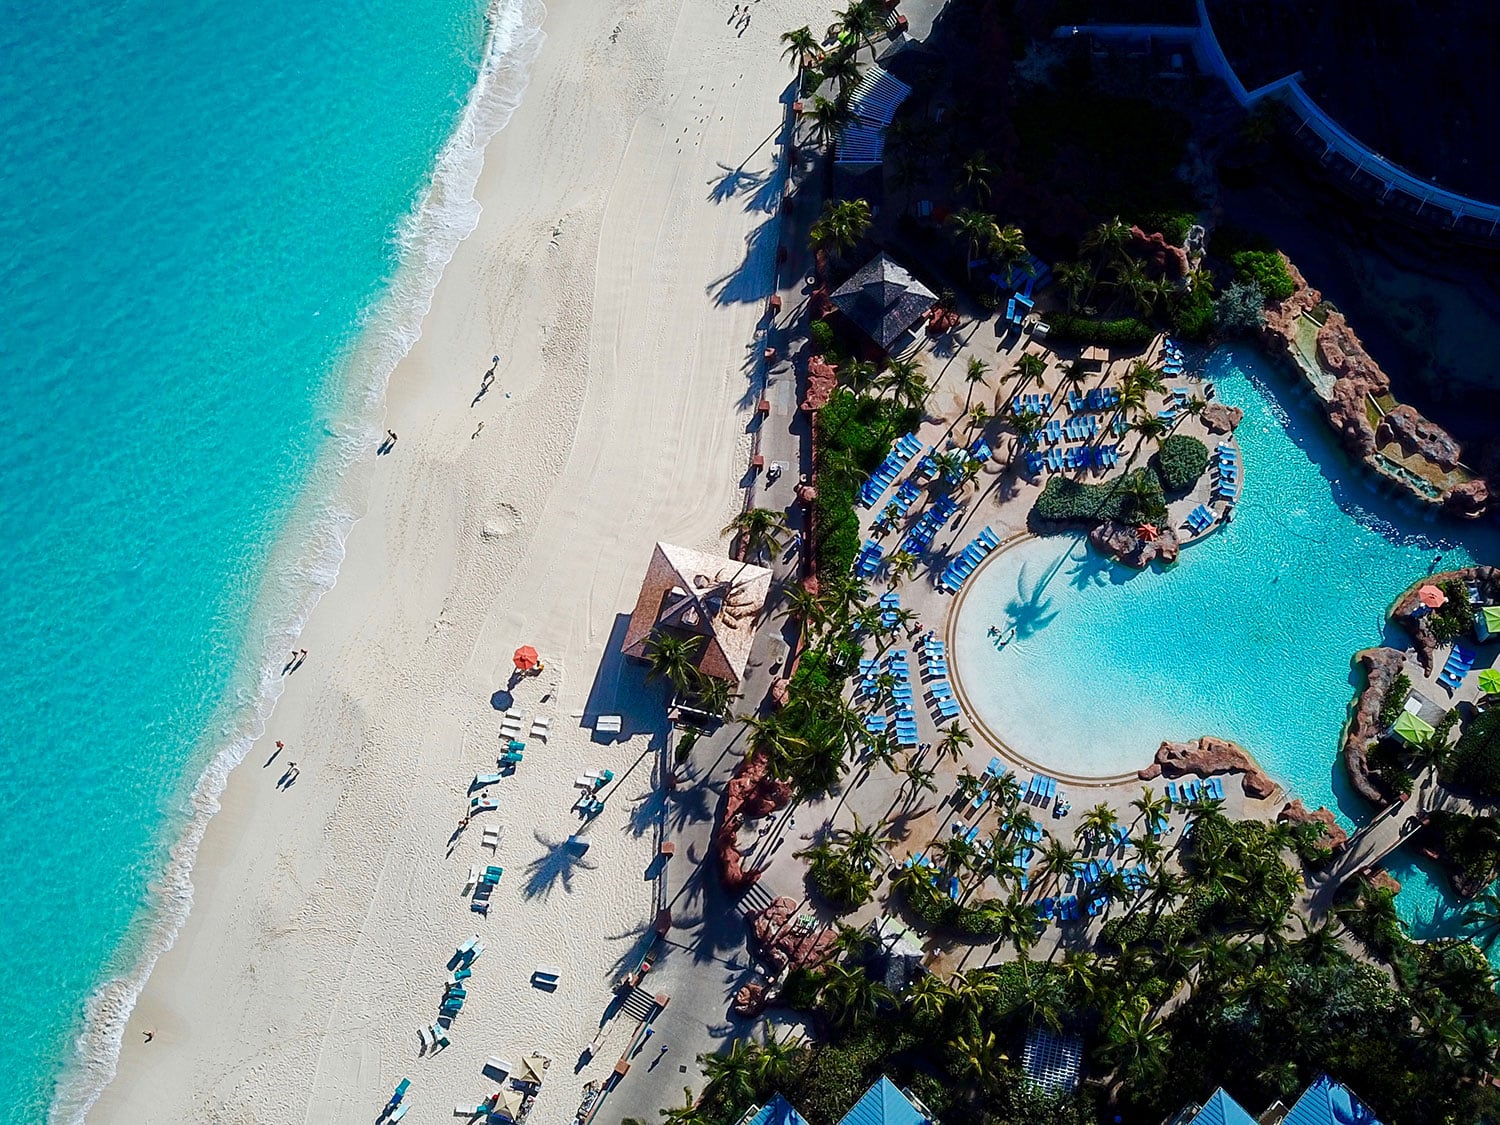 An aerial view of a beach resort on an island.